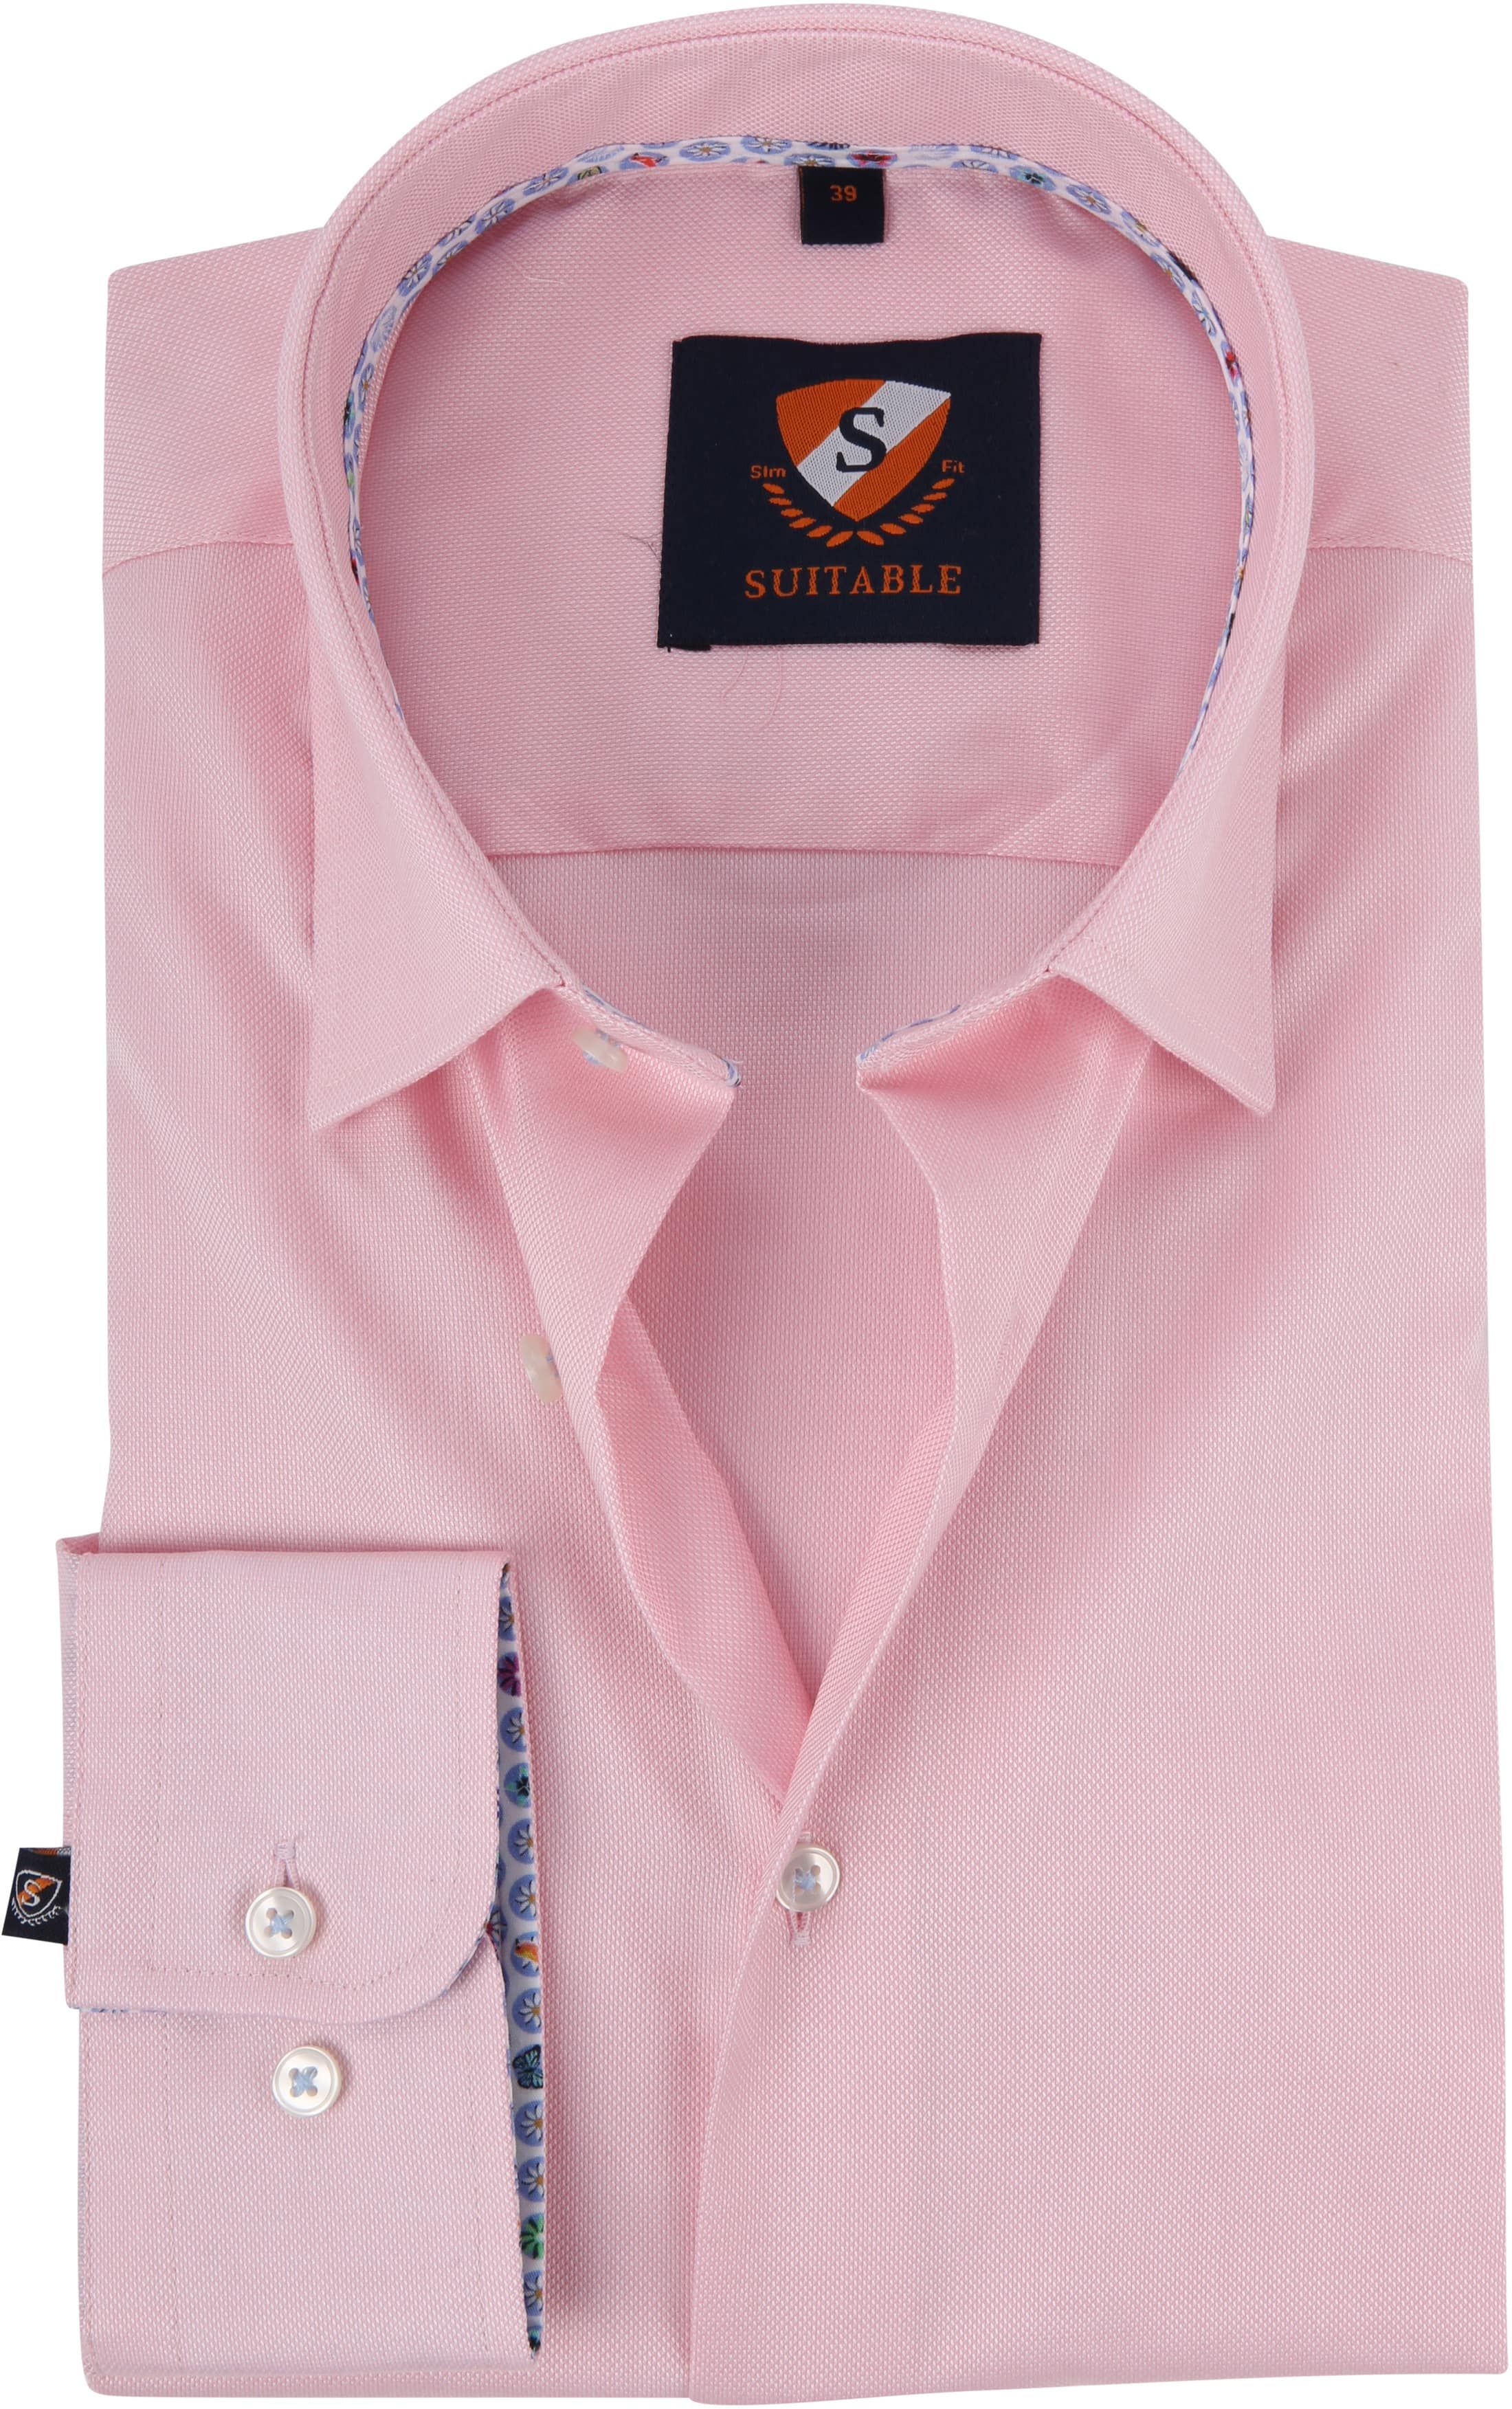 Suitable Shirt HBD Pink size 15 1/2